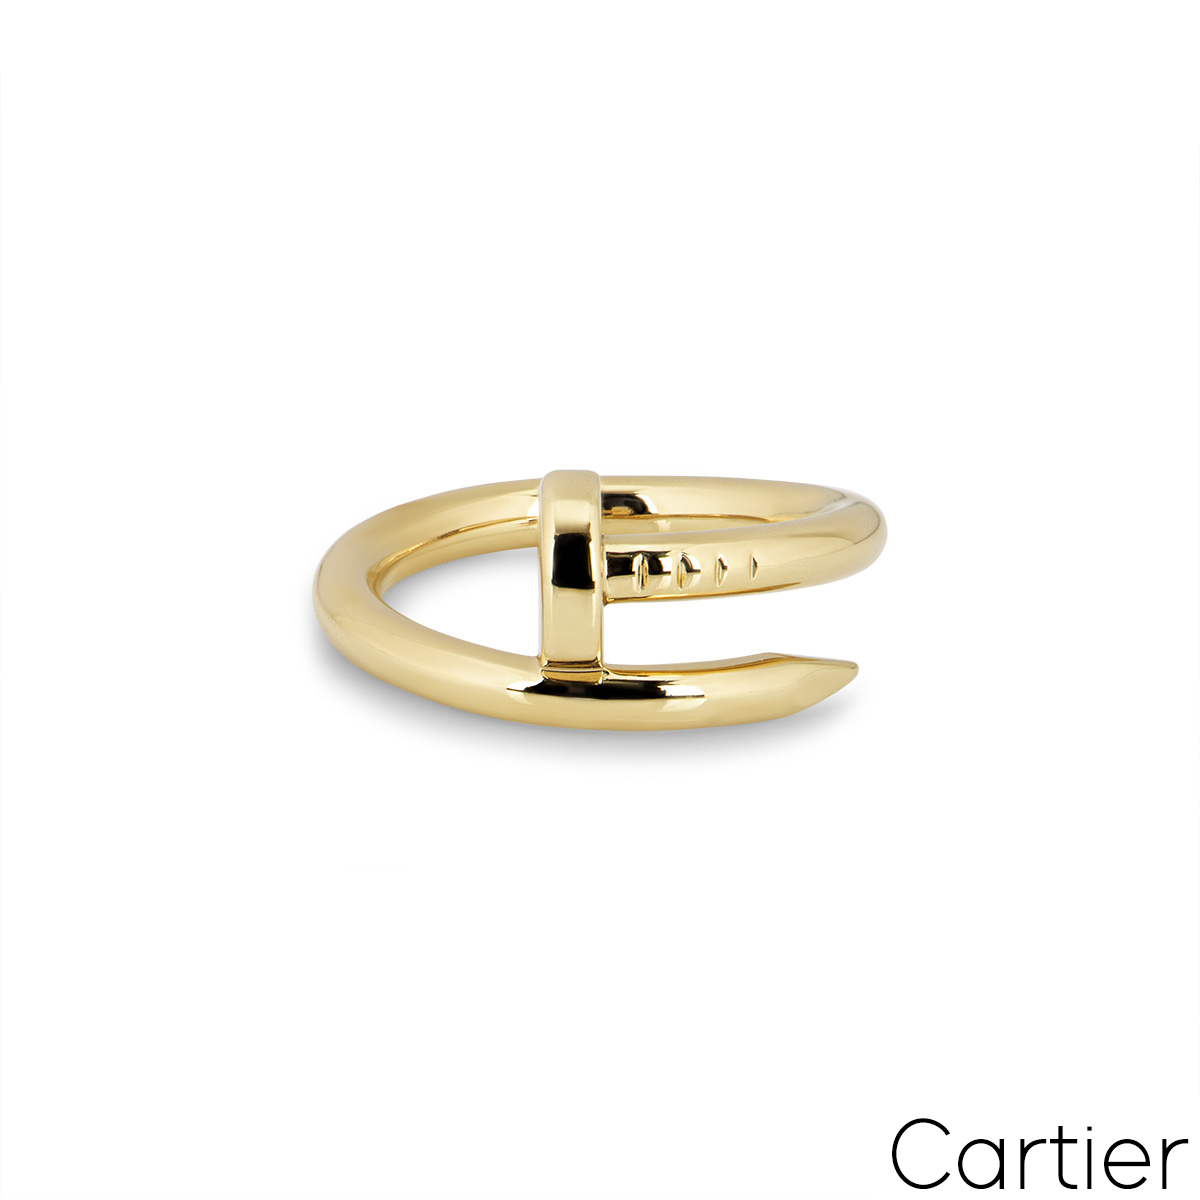 Cartier 18k Yellow Gold Juste un Clou Ring Size 56 B4092600